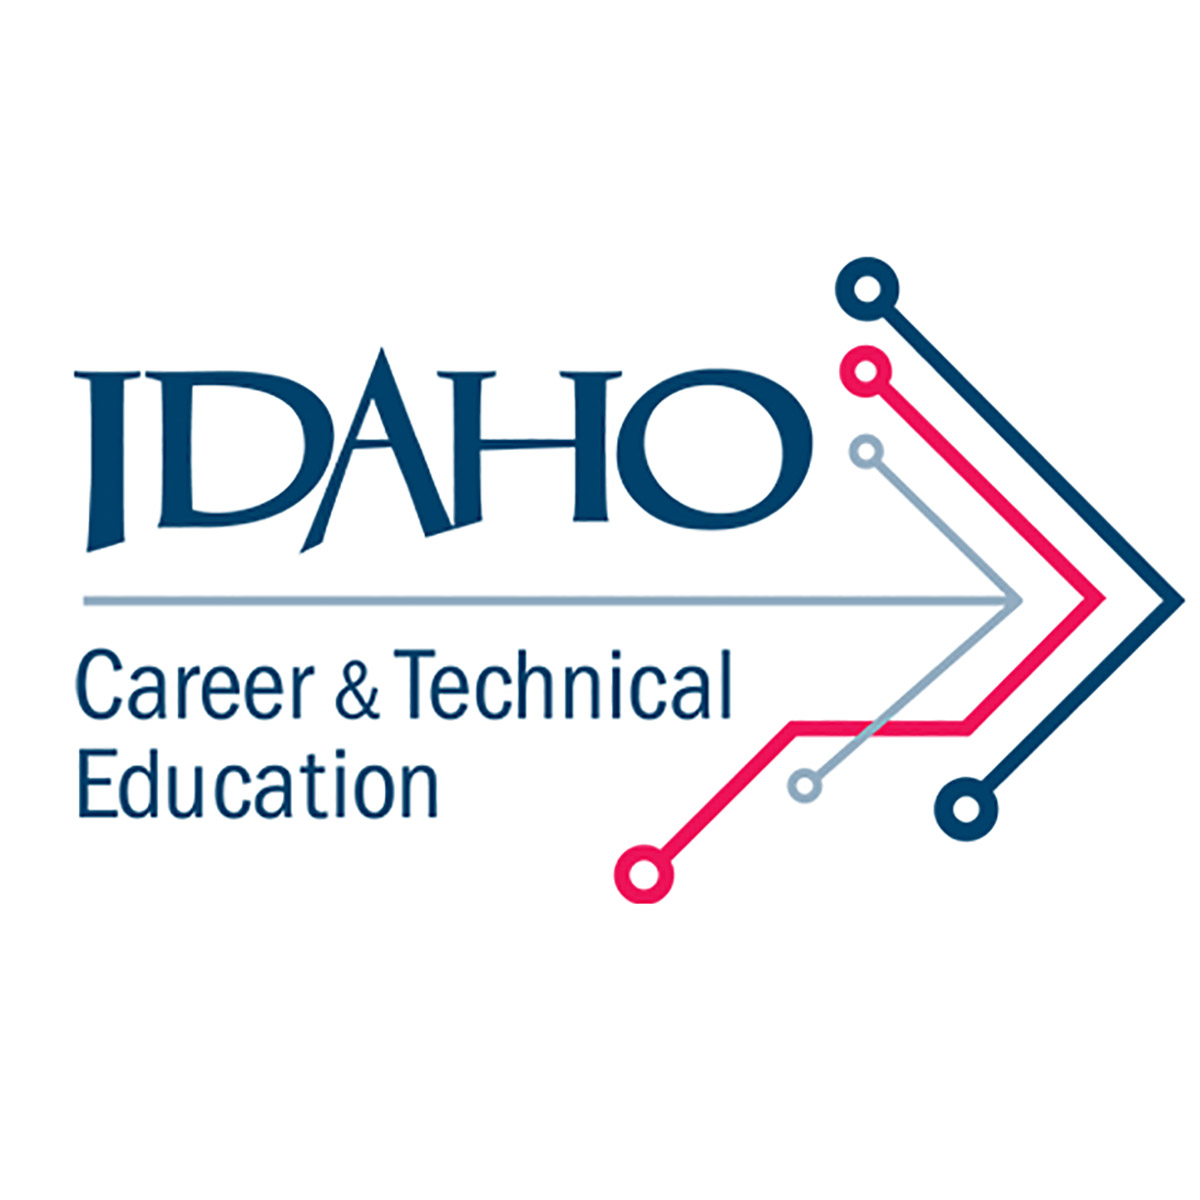 Idaho Career and Technical Education logo